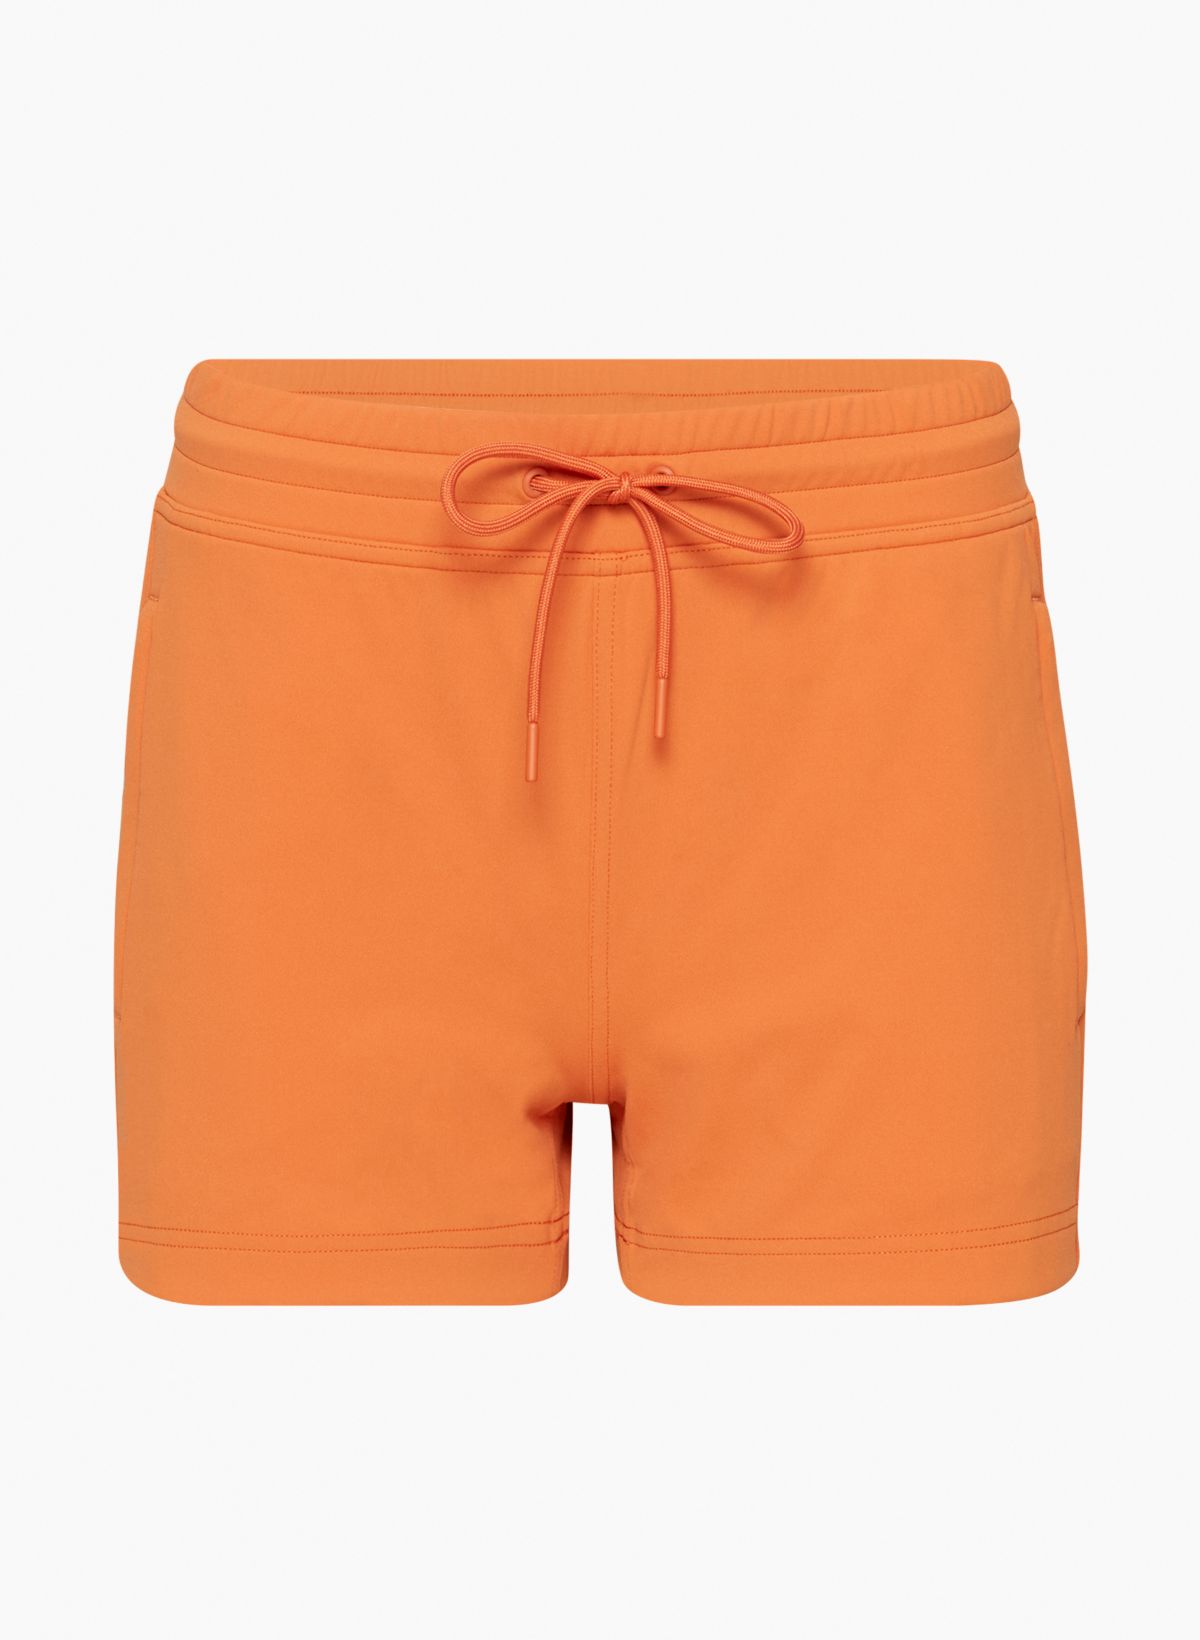 Womens Shorts Bas Ic Slip Bike Compression Capris Booty Shorts Orange XXXL  